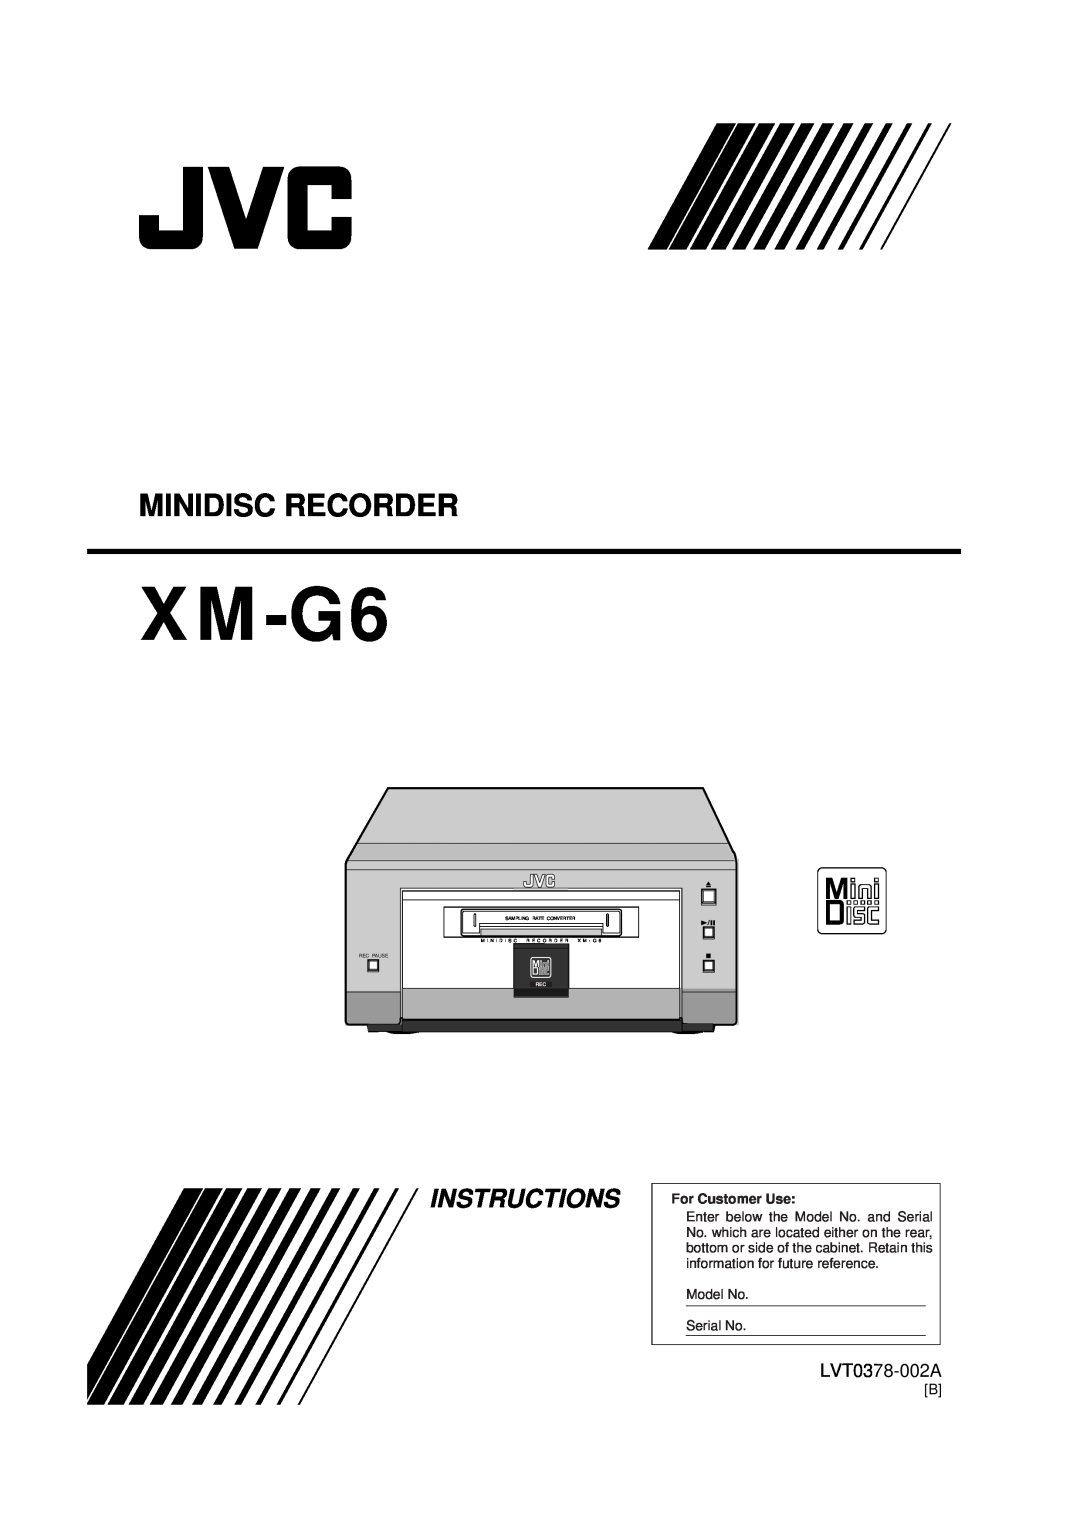 JVC XM-G6 manual Instructions, Minidisc Recorder, LVT0378-002A, For Customer Use, Model No Serial No, Rec Pause 